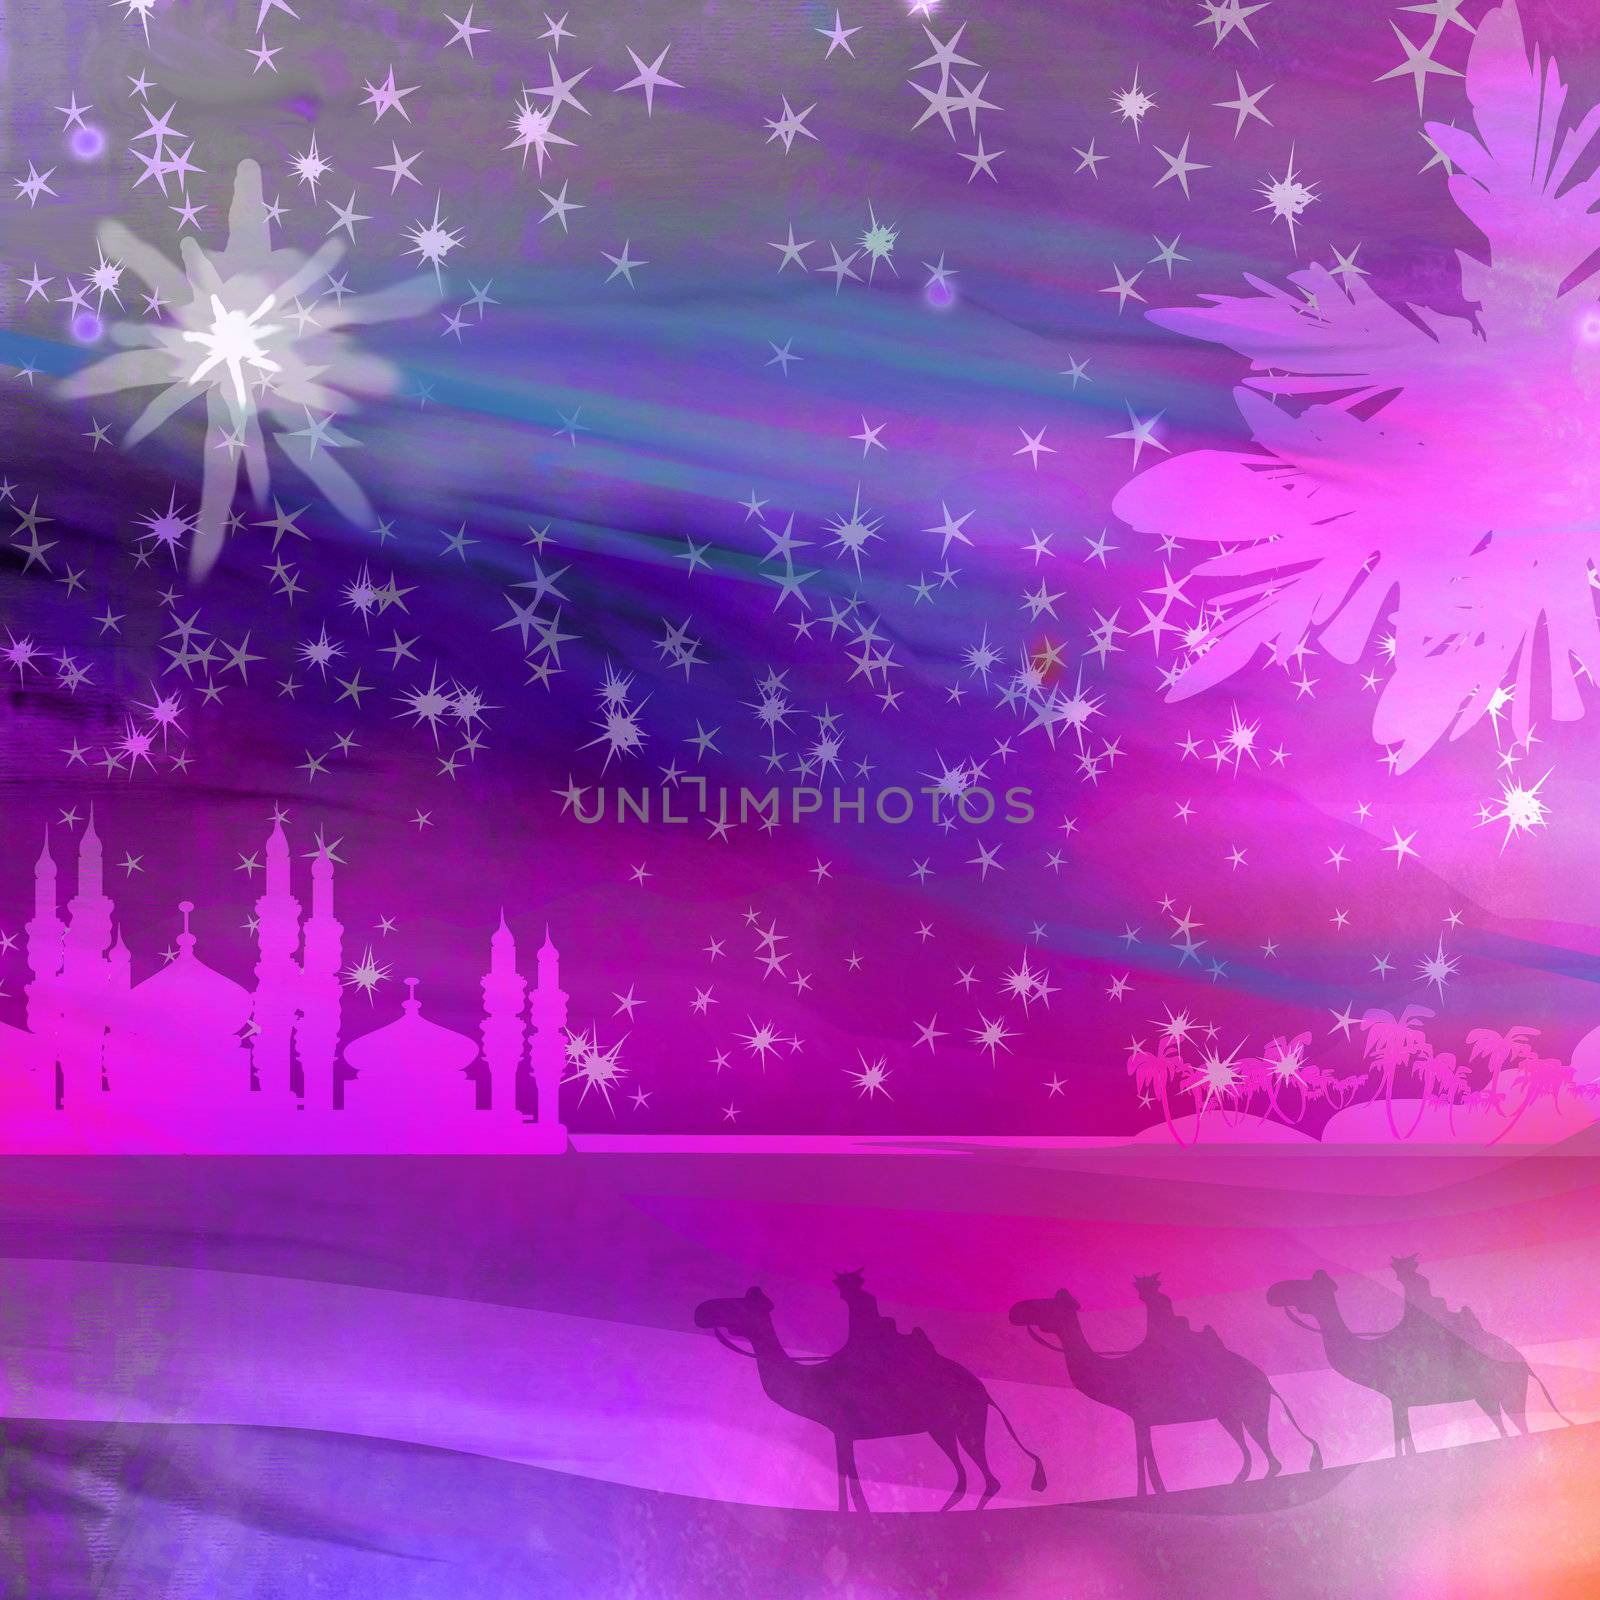 Classic three magic scene and shining star of Bethlehem by JackyBrown